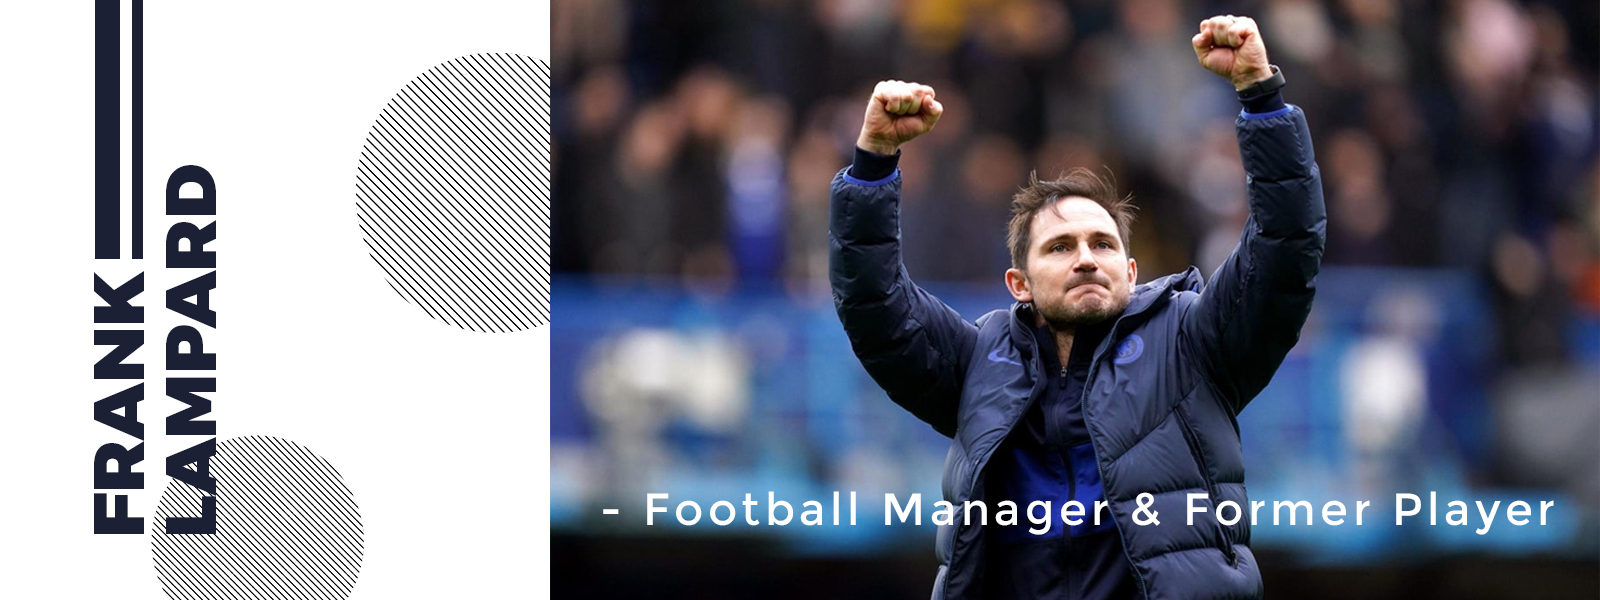 Frank Lampard - English Football Manager